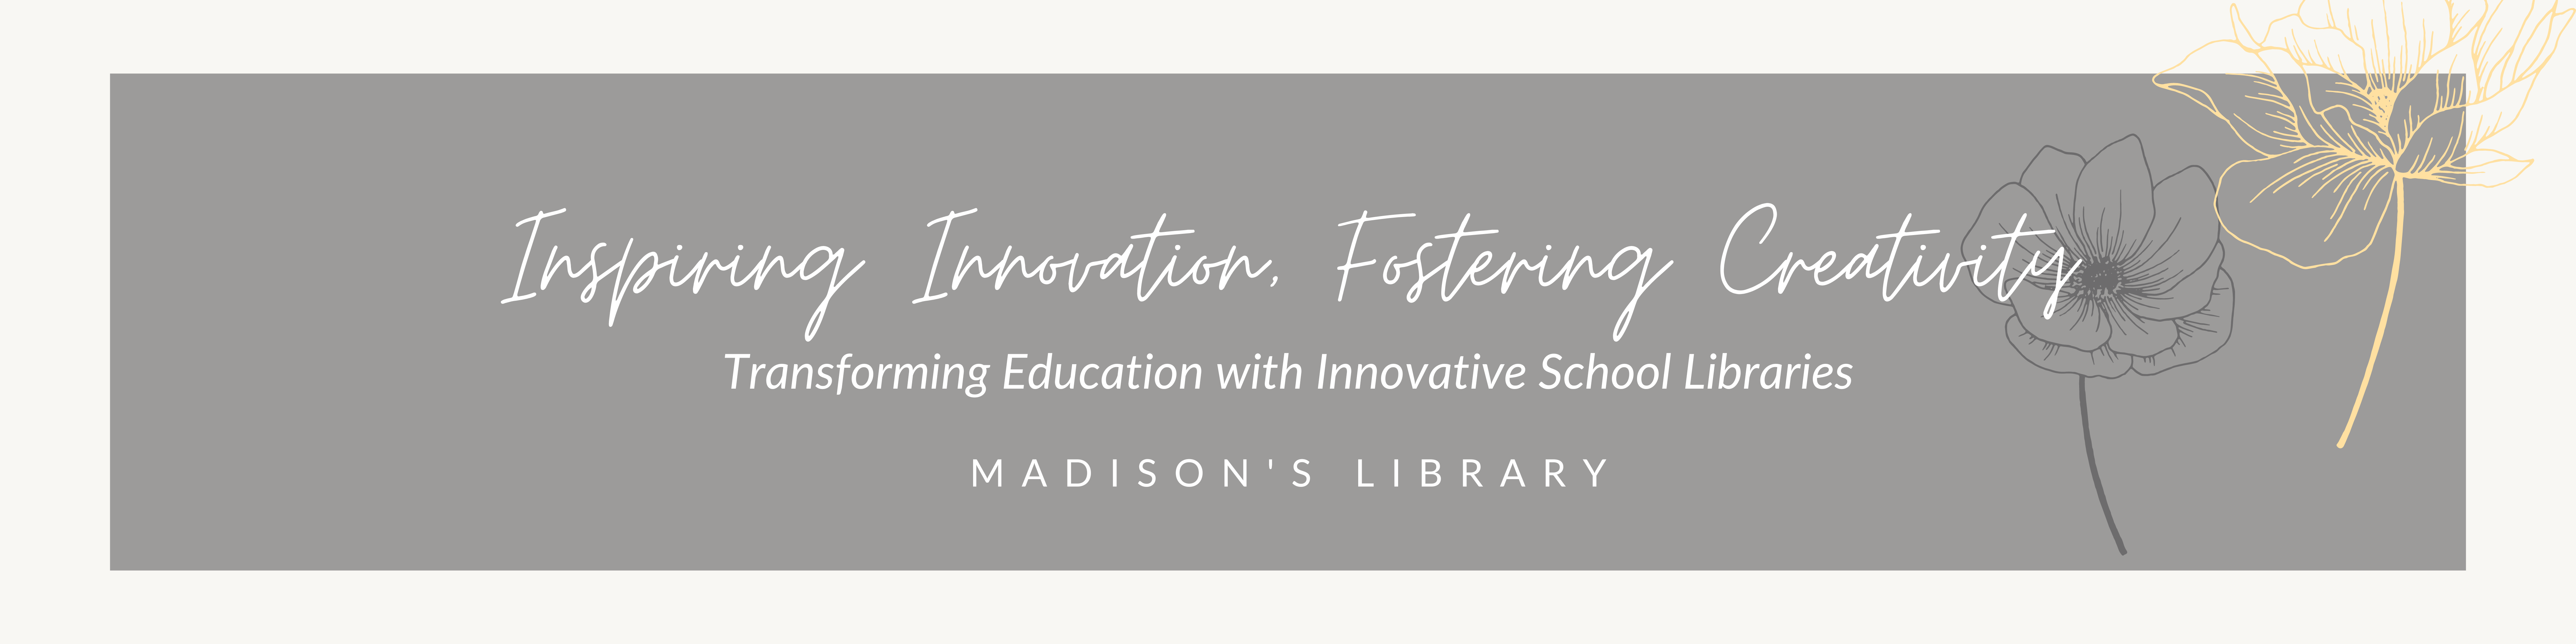 Inspiring Innovation, Fostering creativity. Transforming education with innovative school libraries